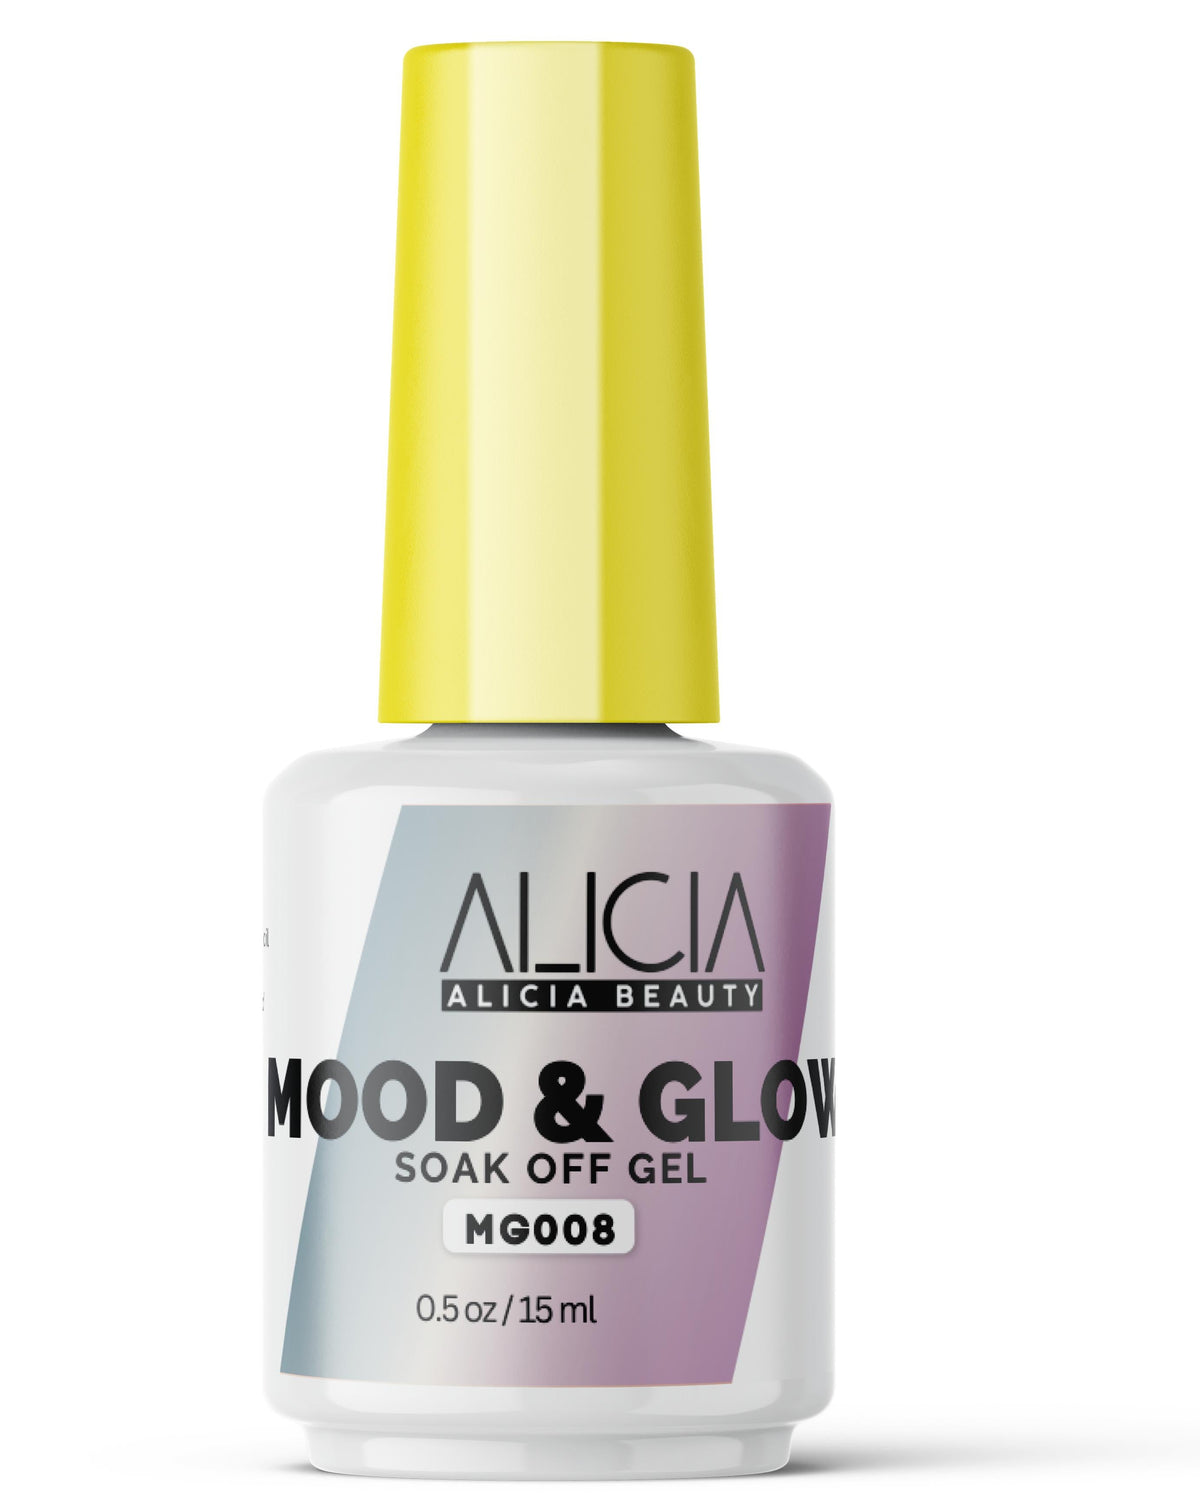 Alicia Beauty - Glow & Mood Soak Off Gel - MG008 (0.5oz/15ml)-GEL POLISH SOAK-OFF-ALICIA BEAUTY- Nail Supply American Gel Polish - Phuong Ni